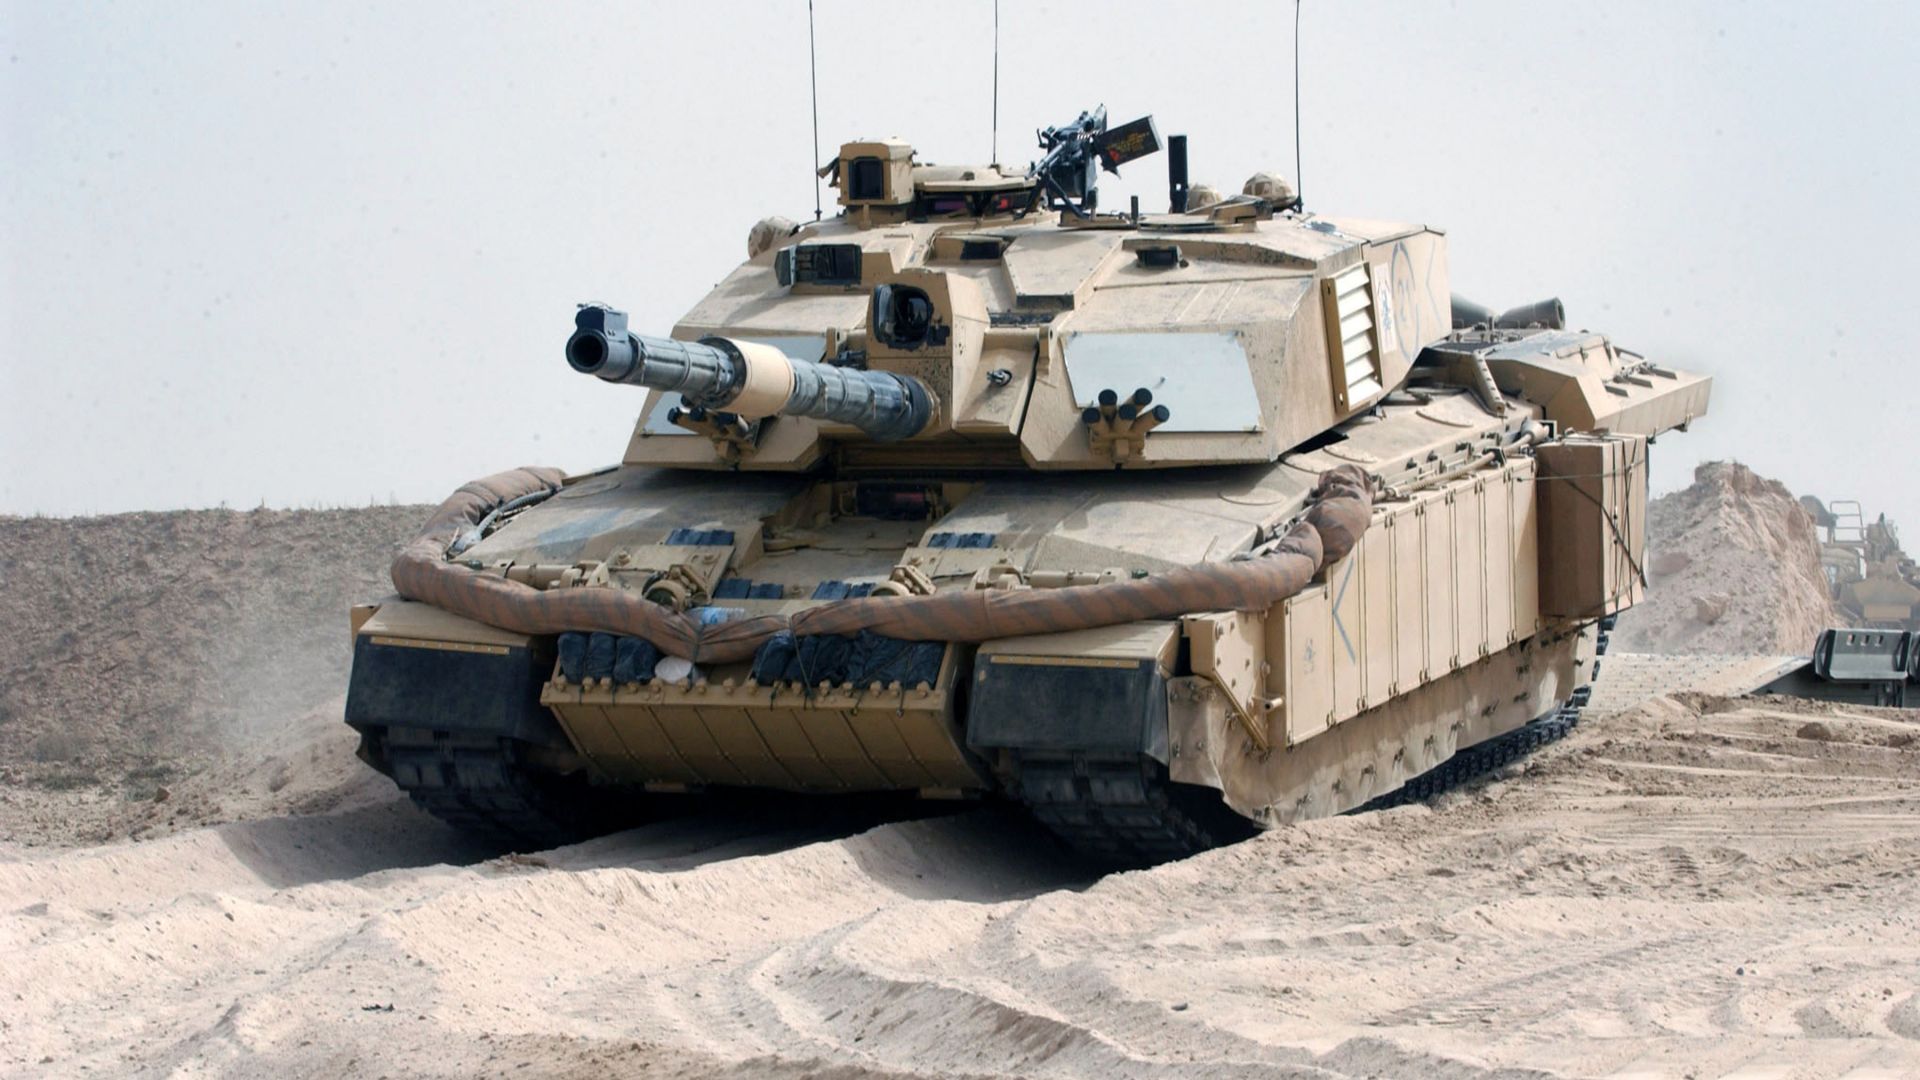 Челленджер 2, ФВ4034, танк, армия Британии, Challenger 2, FV4034, MBT, tank, British Army, United Kingdom, armoured, desert (horizontal)